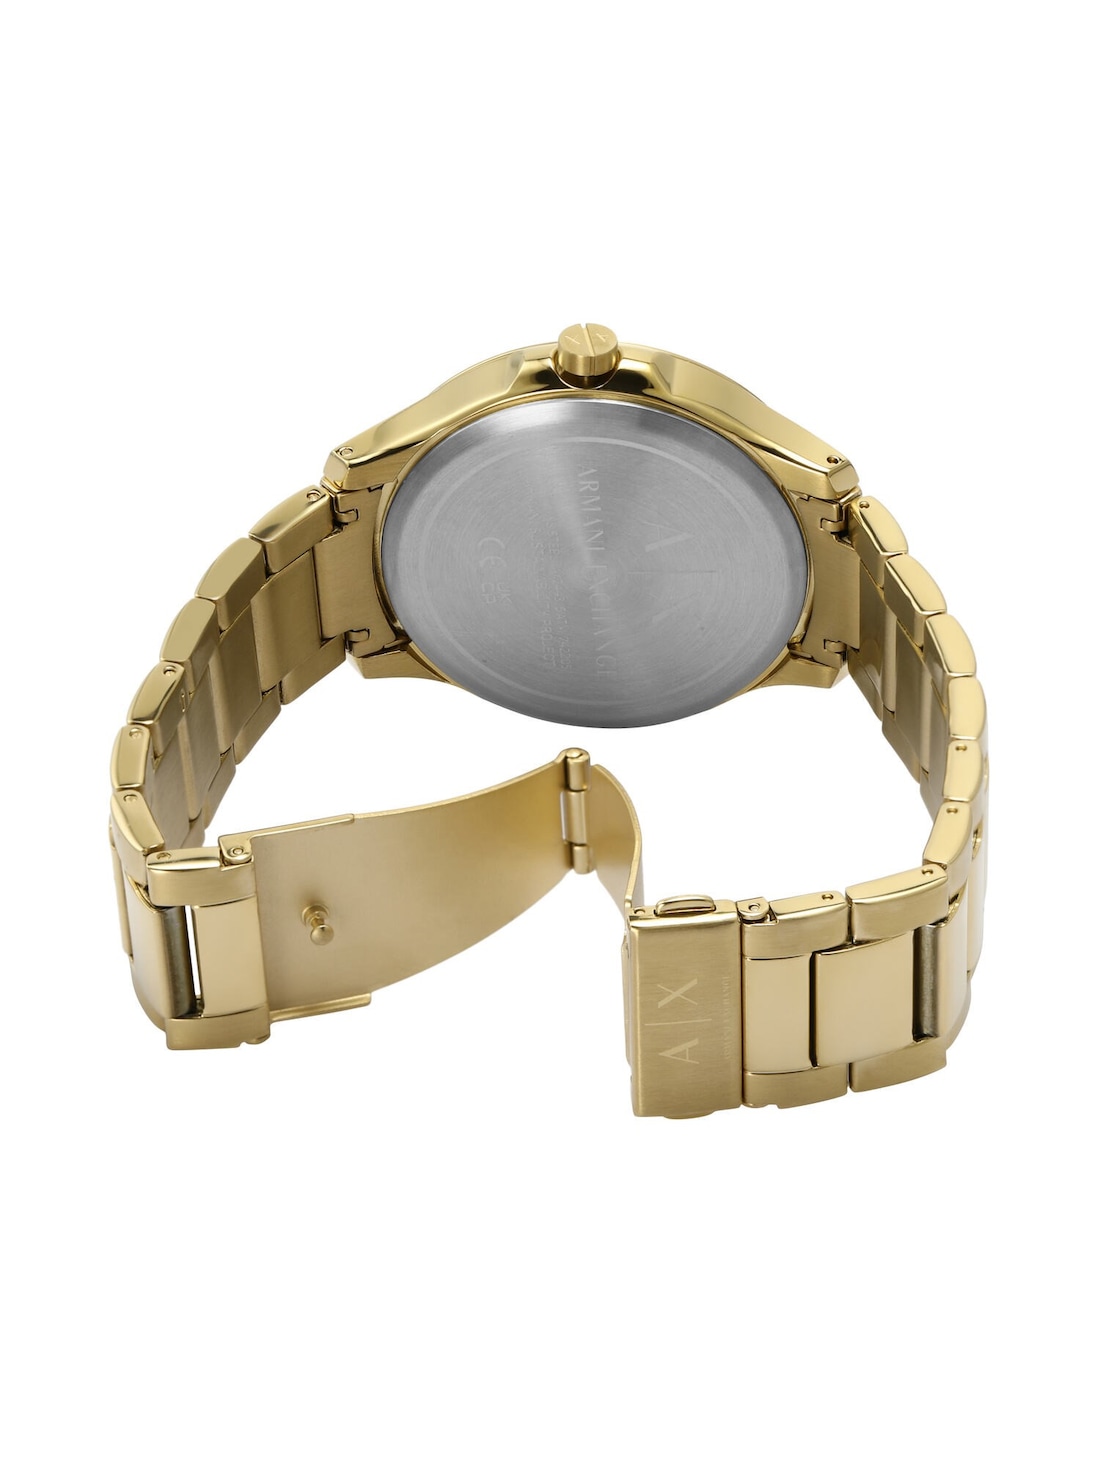 Armani Exchange Gold Watch AX2443 - Watch Station India